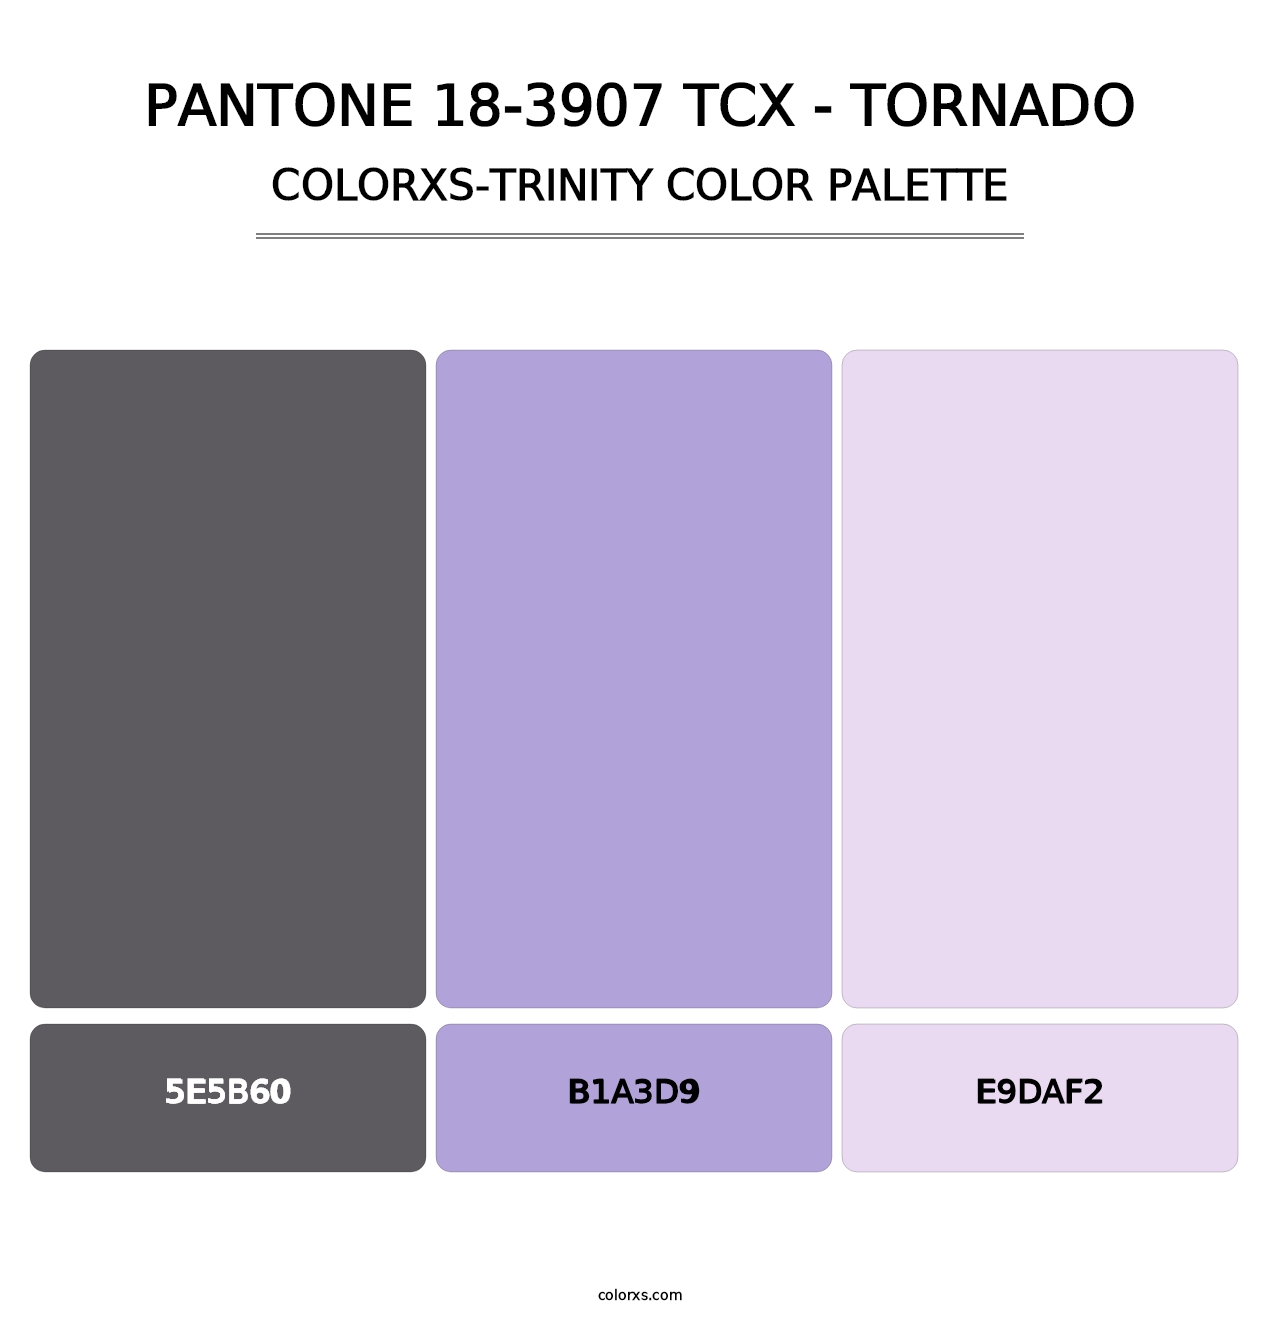 PANTONE 18-3907 TCX - Tornado - Colorxs Trinity Palette